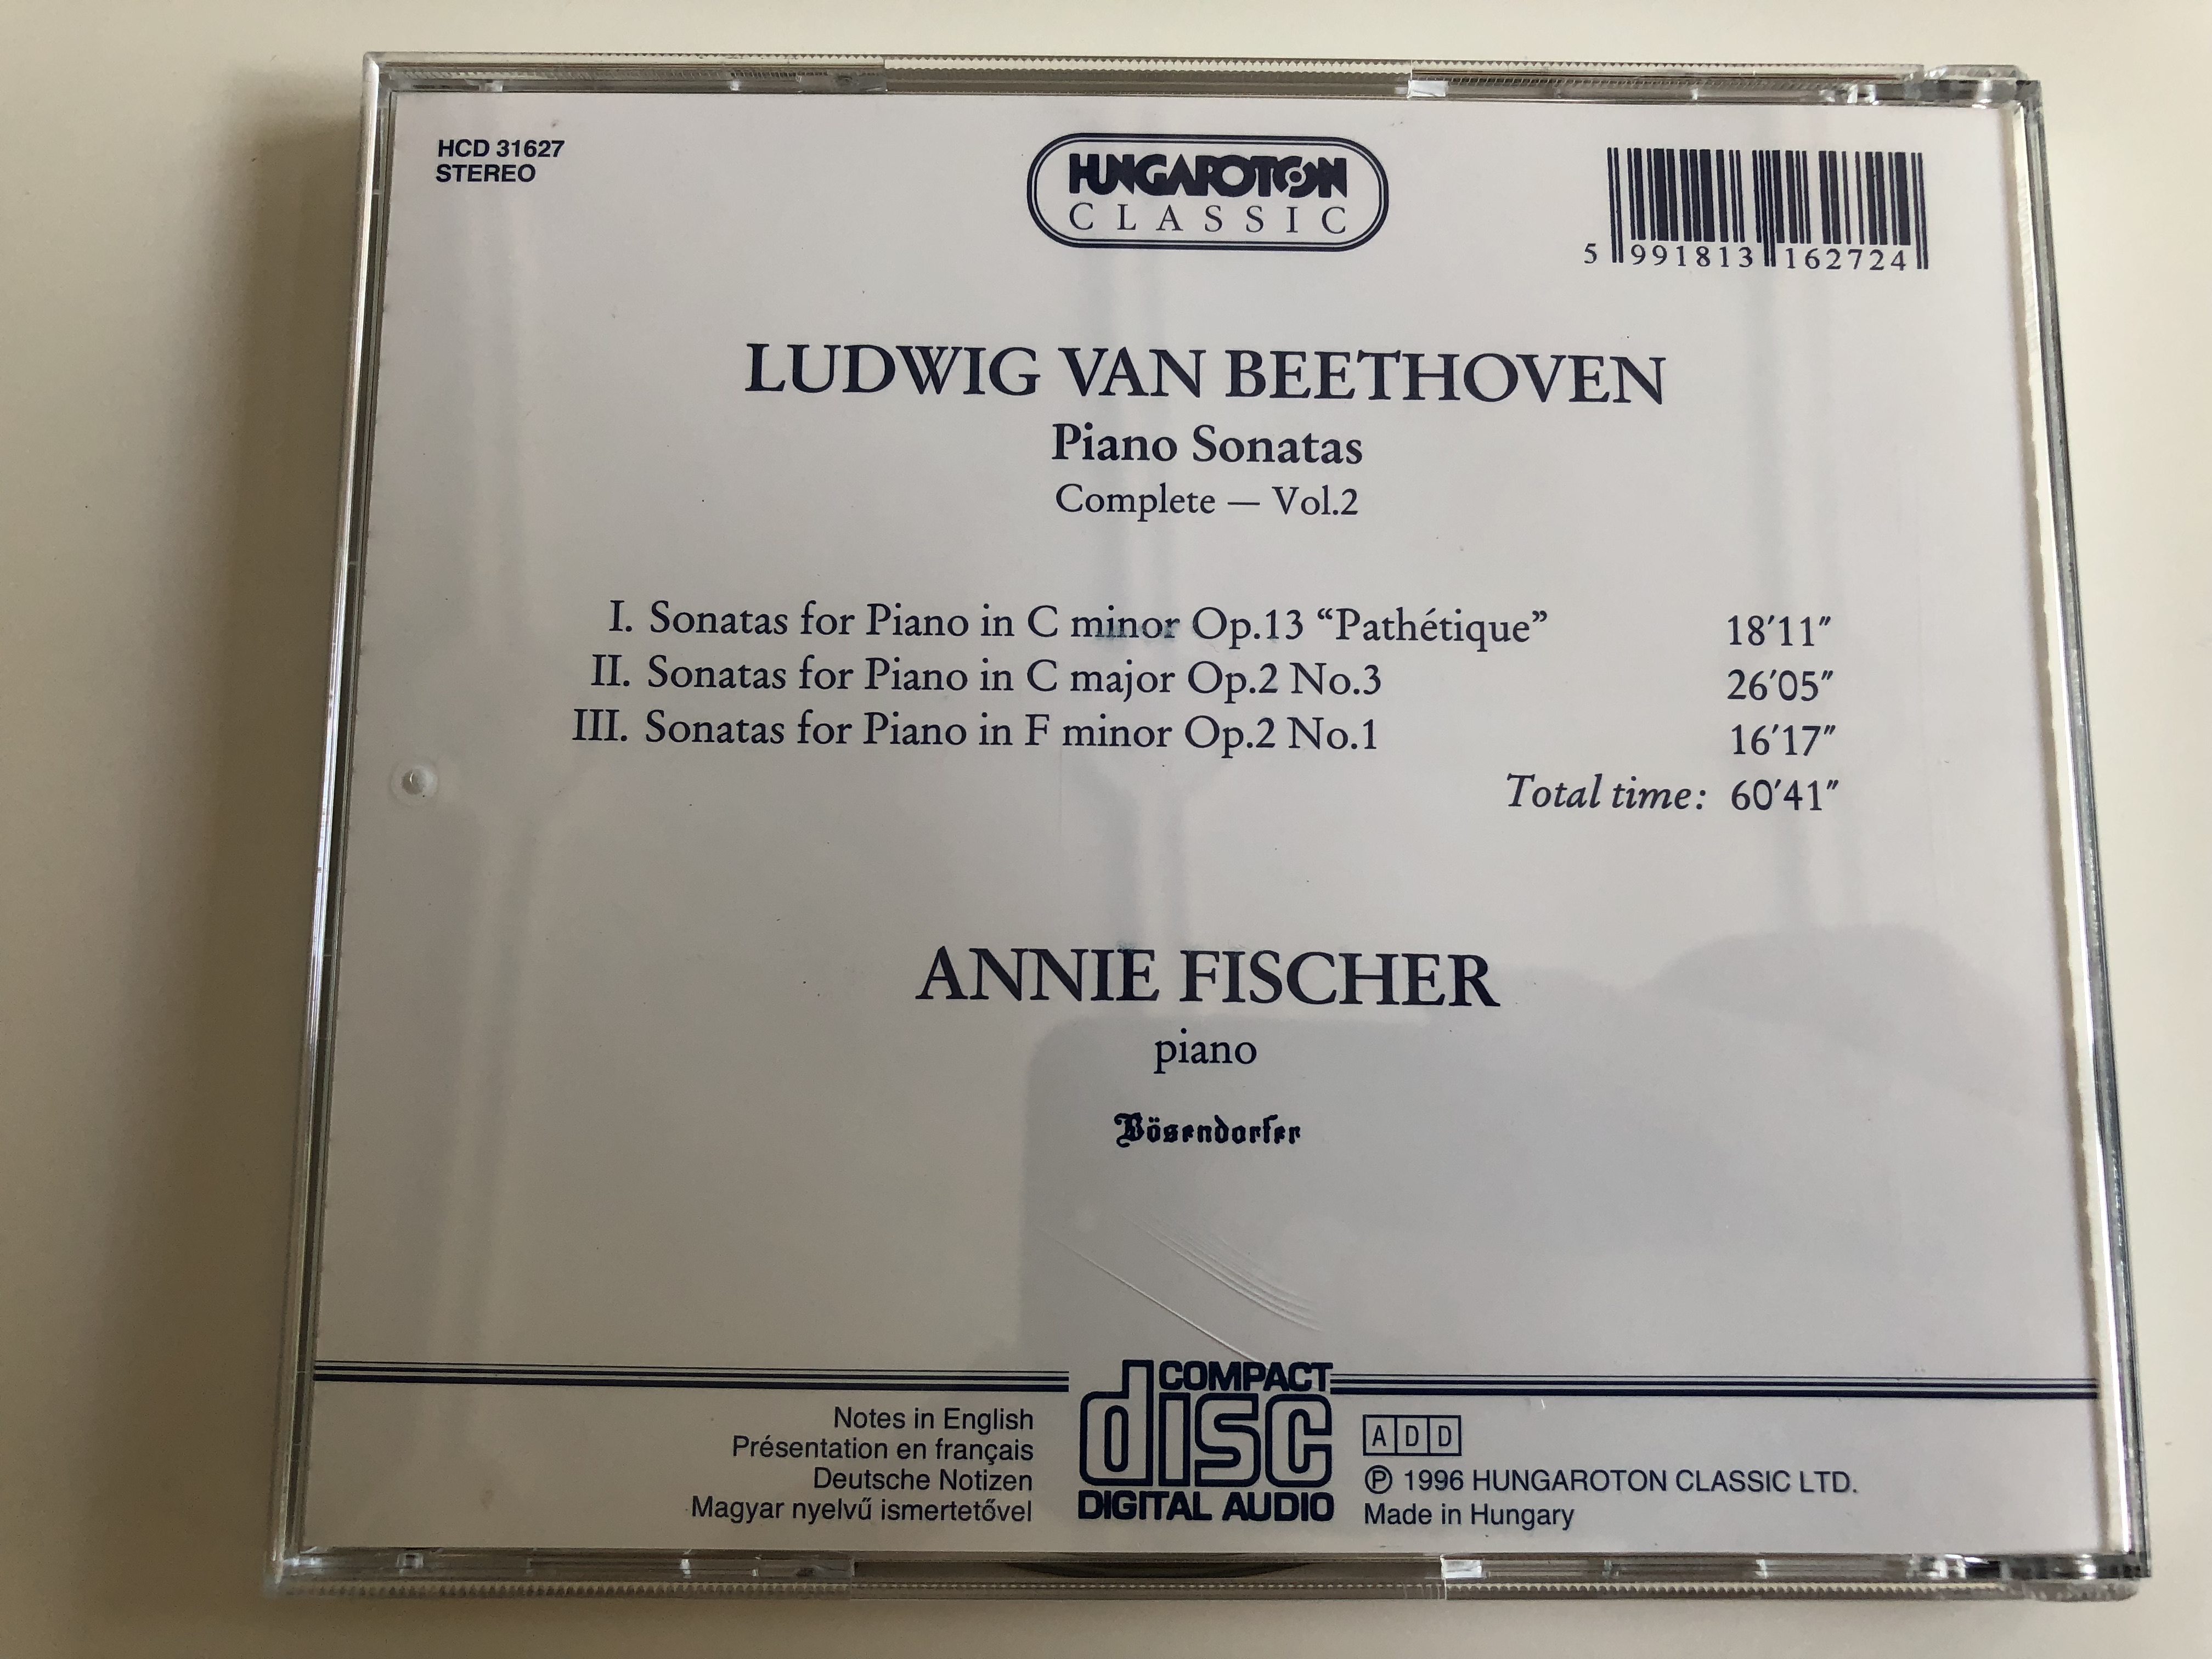 annie-fischer-beethoven-piano-sonatas-complete-vol.-2-c-minor-op.-13-pathetique-c-major-op.-2-no.3-f-minor-op.-2-no.1-audio-cd-1996-hungaroton-classic-hcd-31627-8-.jpg